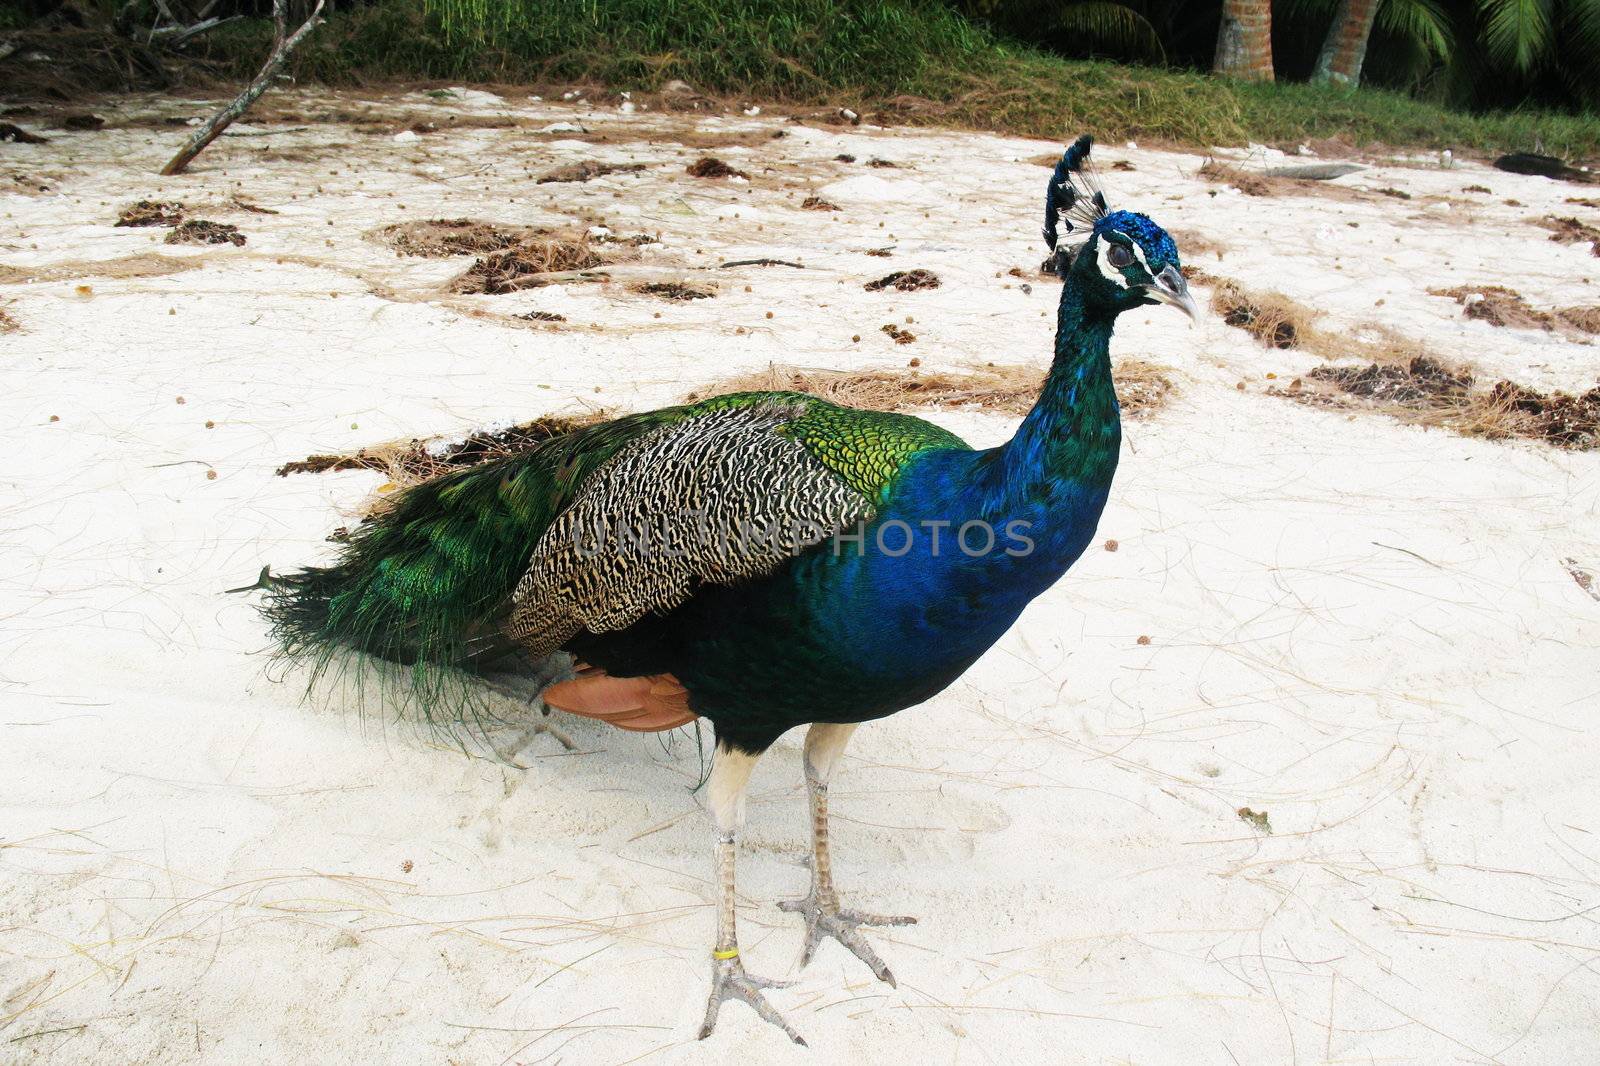 Peacock walking on the sand beach